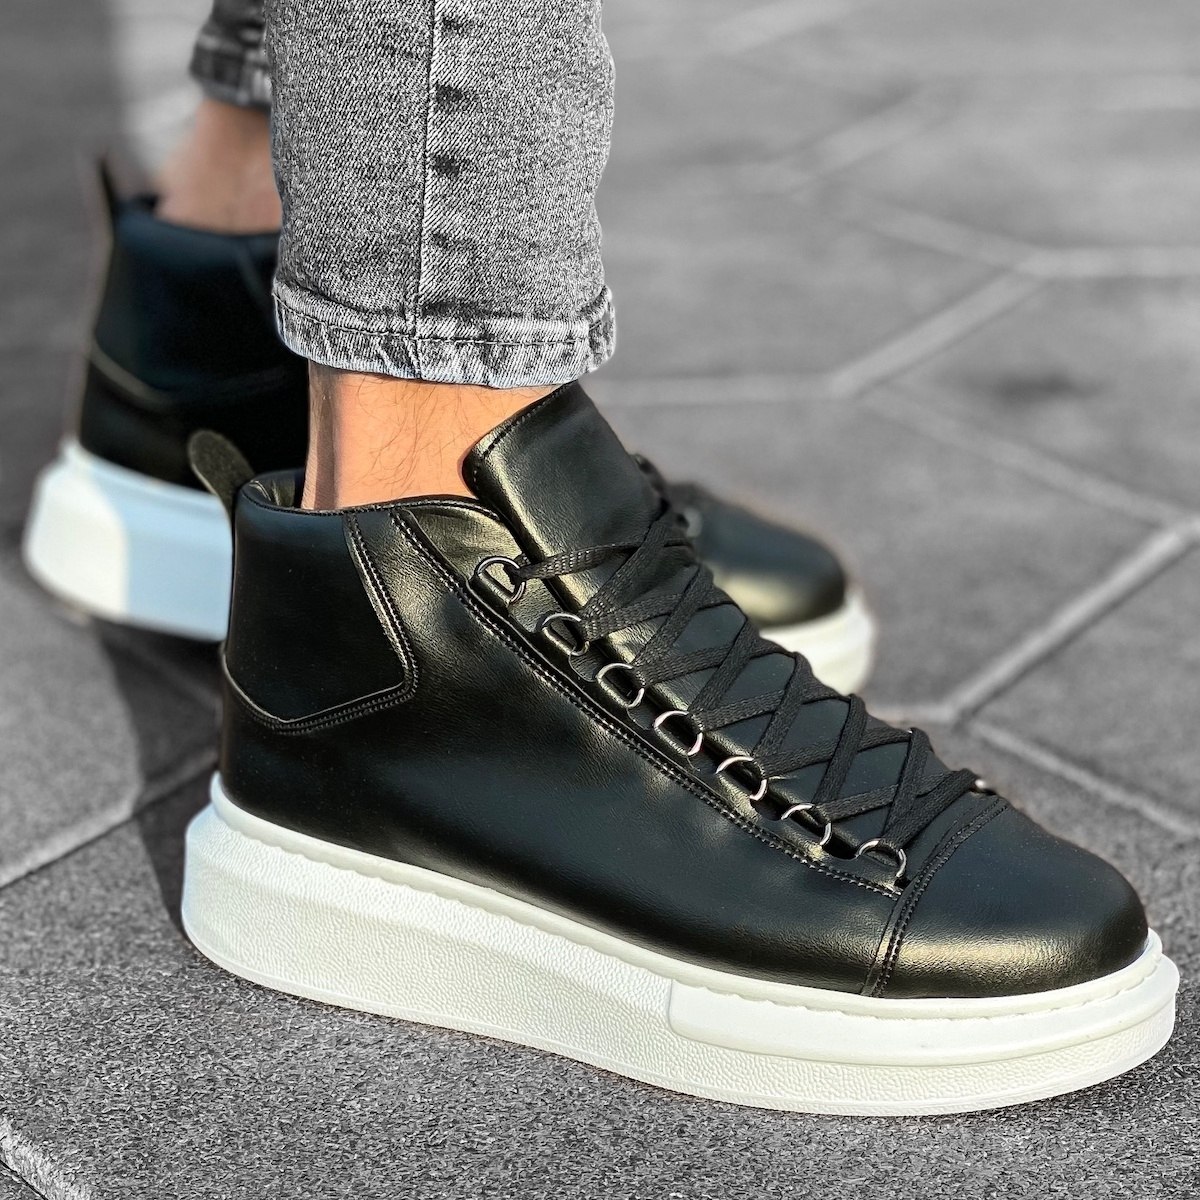 Men’s High Top Sneakers Shoes Black-White | Martin Valen